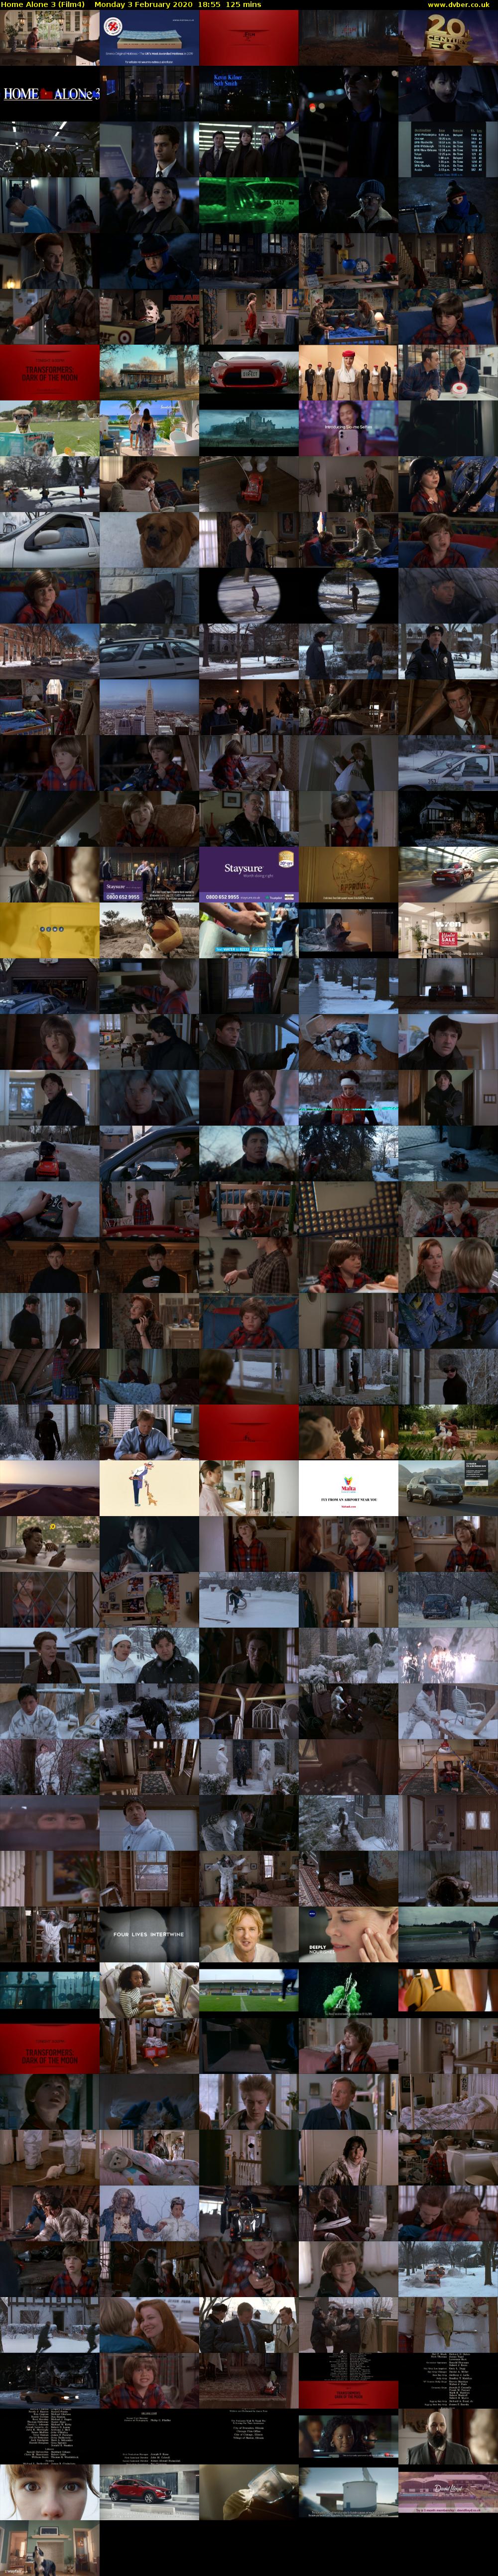 Home Alone 3 (Film4) Monday 3 February 2020 18:55 - 21:00